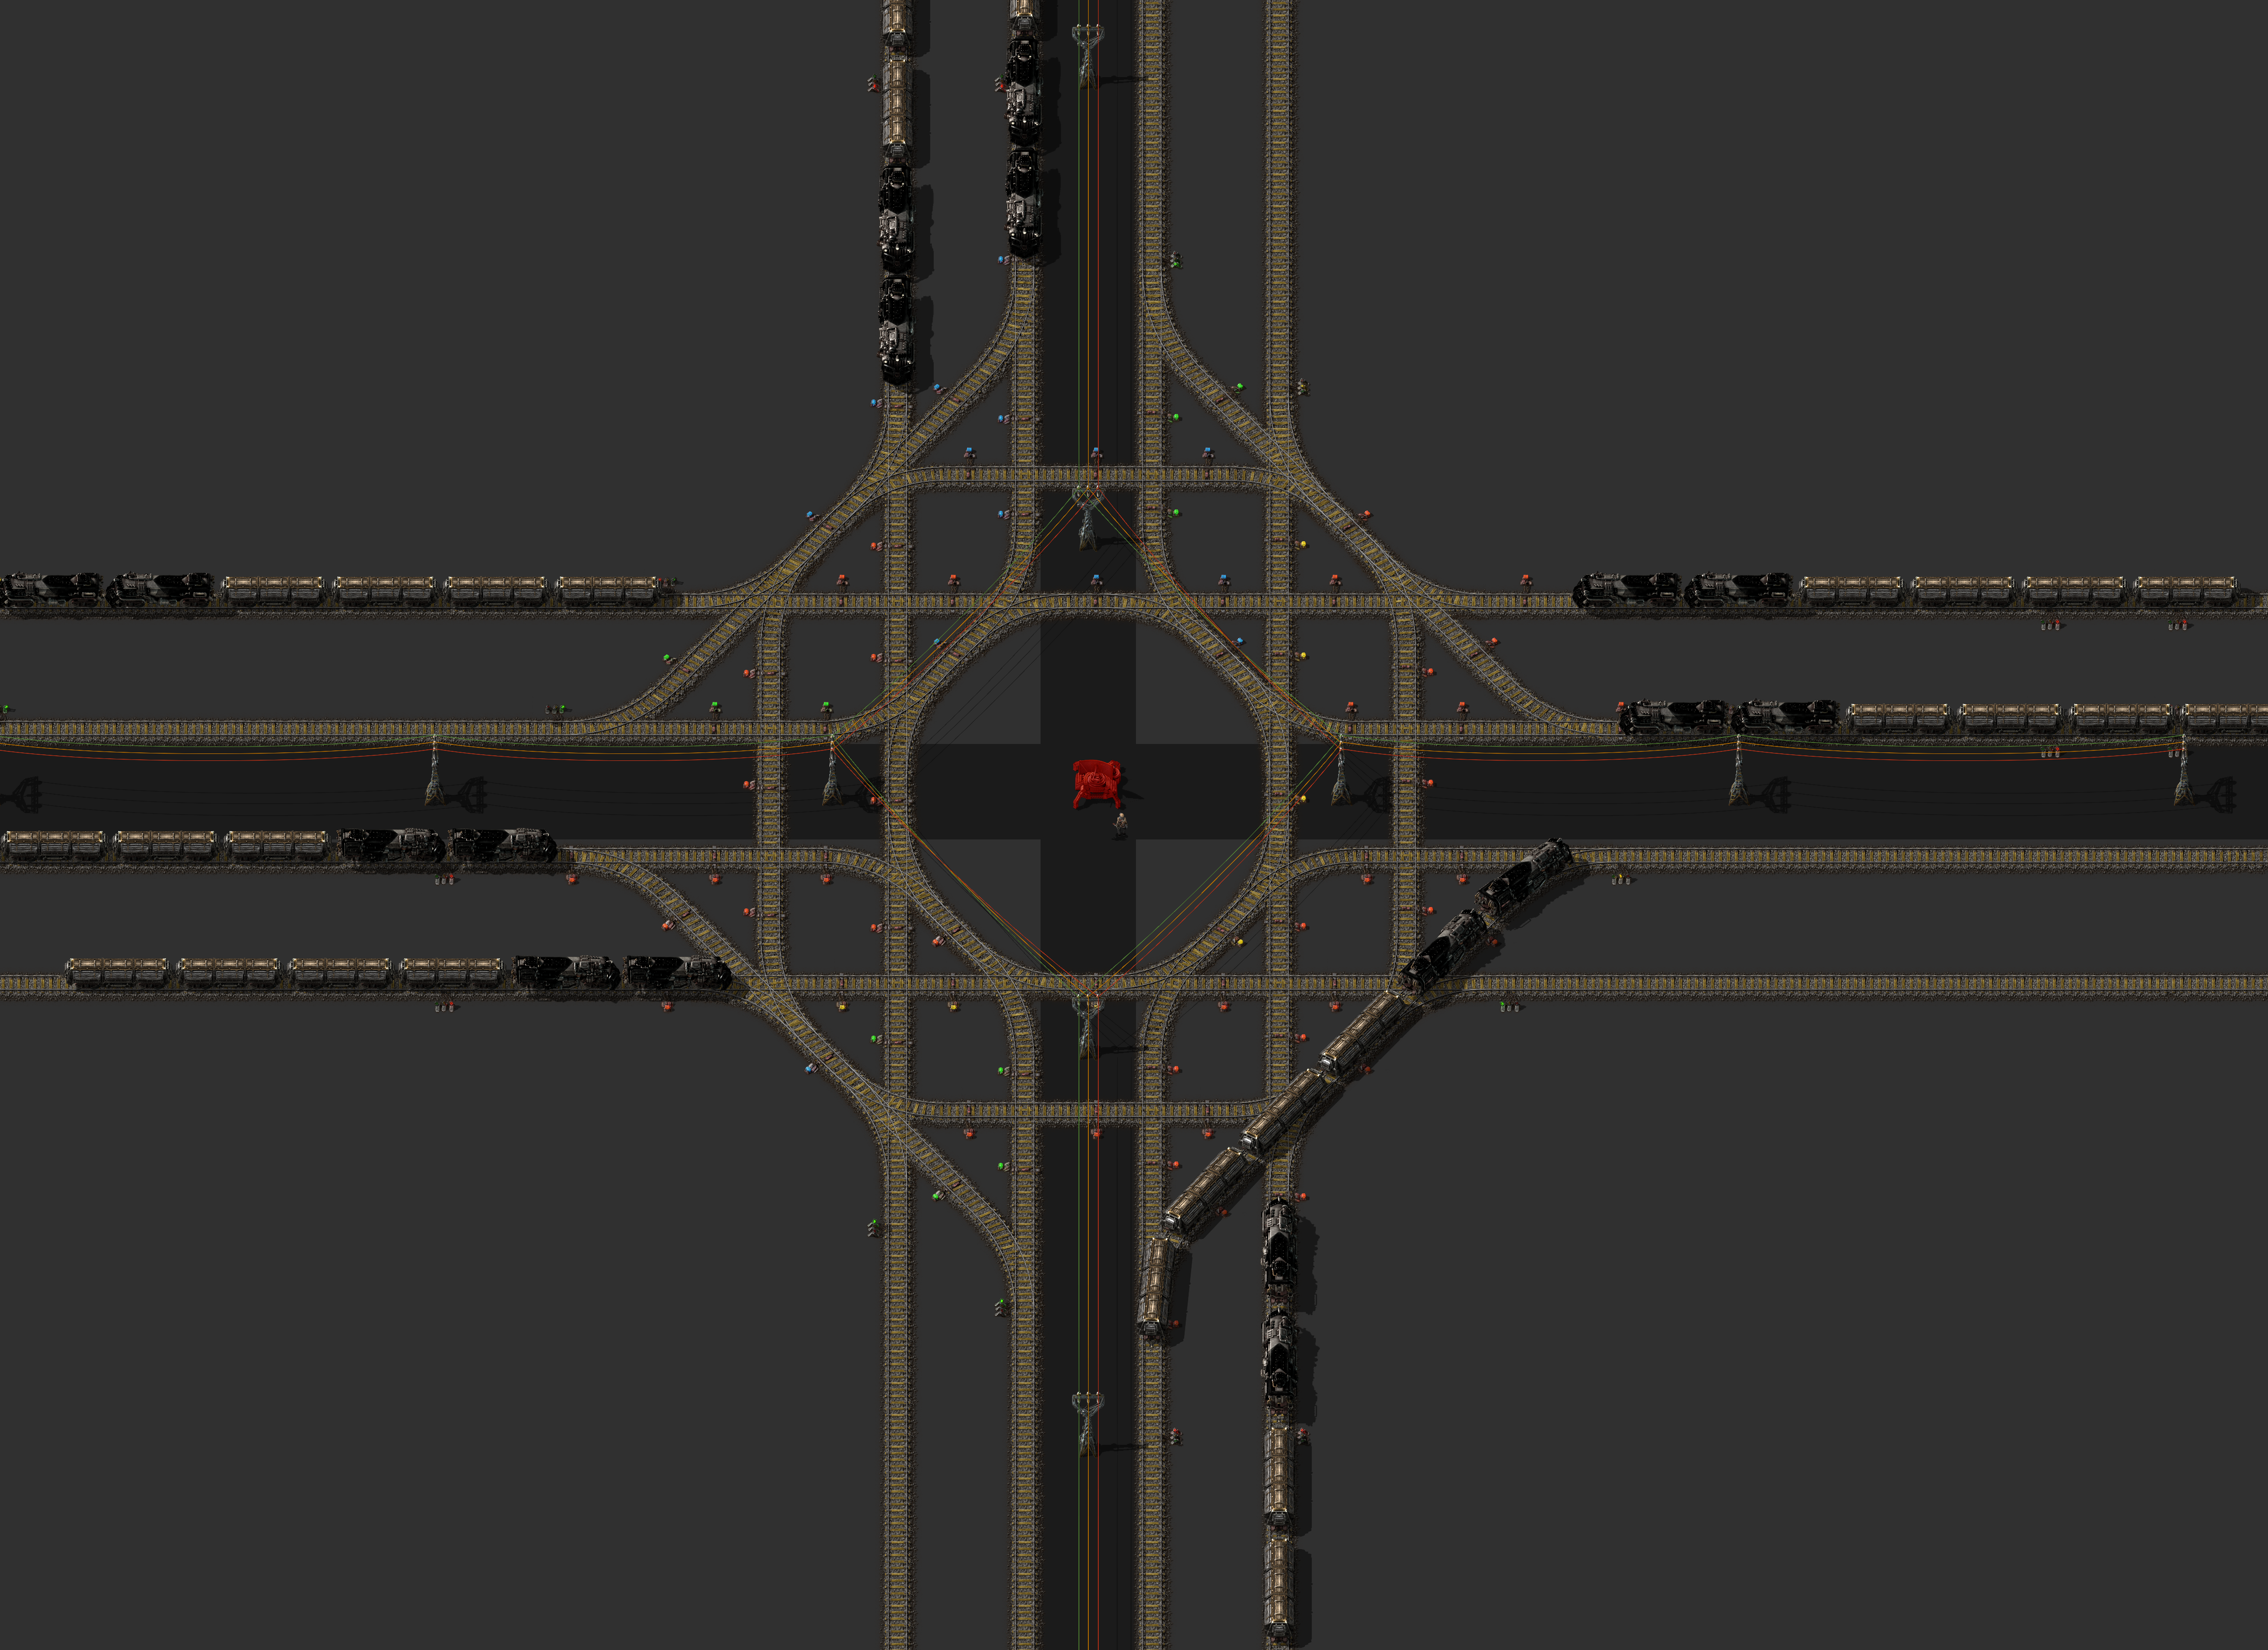 Immortal_sniper1s intersection